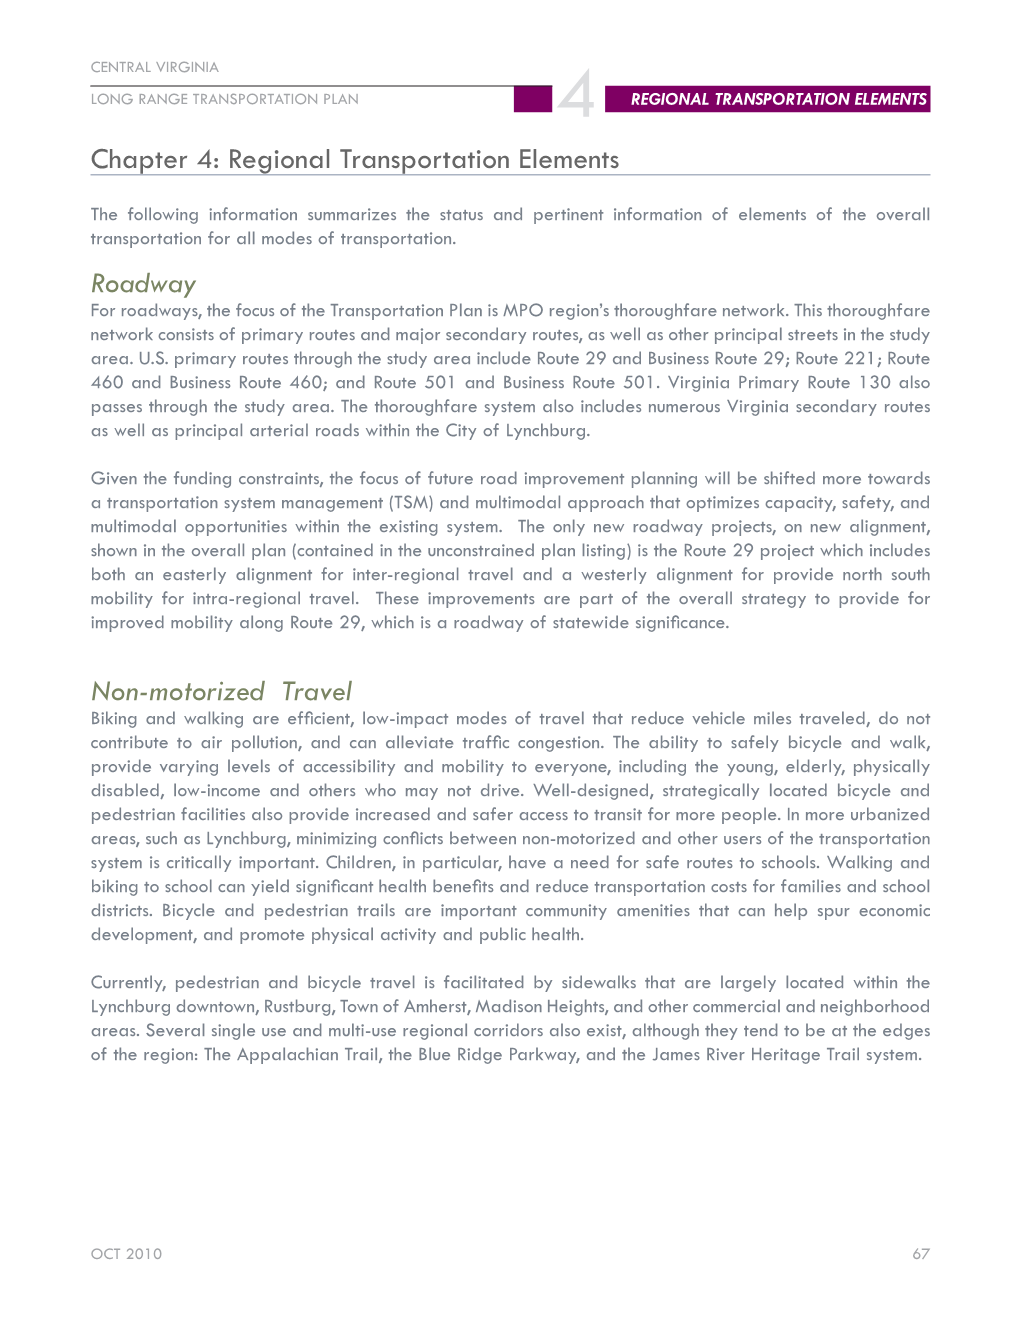 REGIONAL TRANSPORTATION ELEMENTS Chapter 4: Regional Transportation Elements